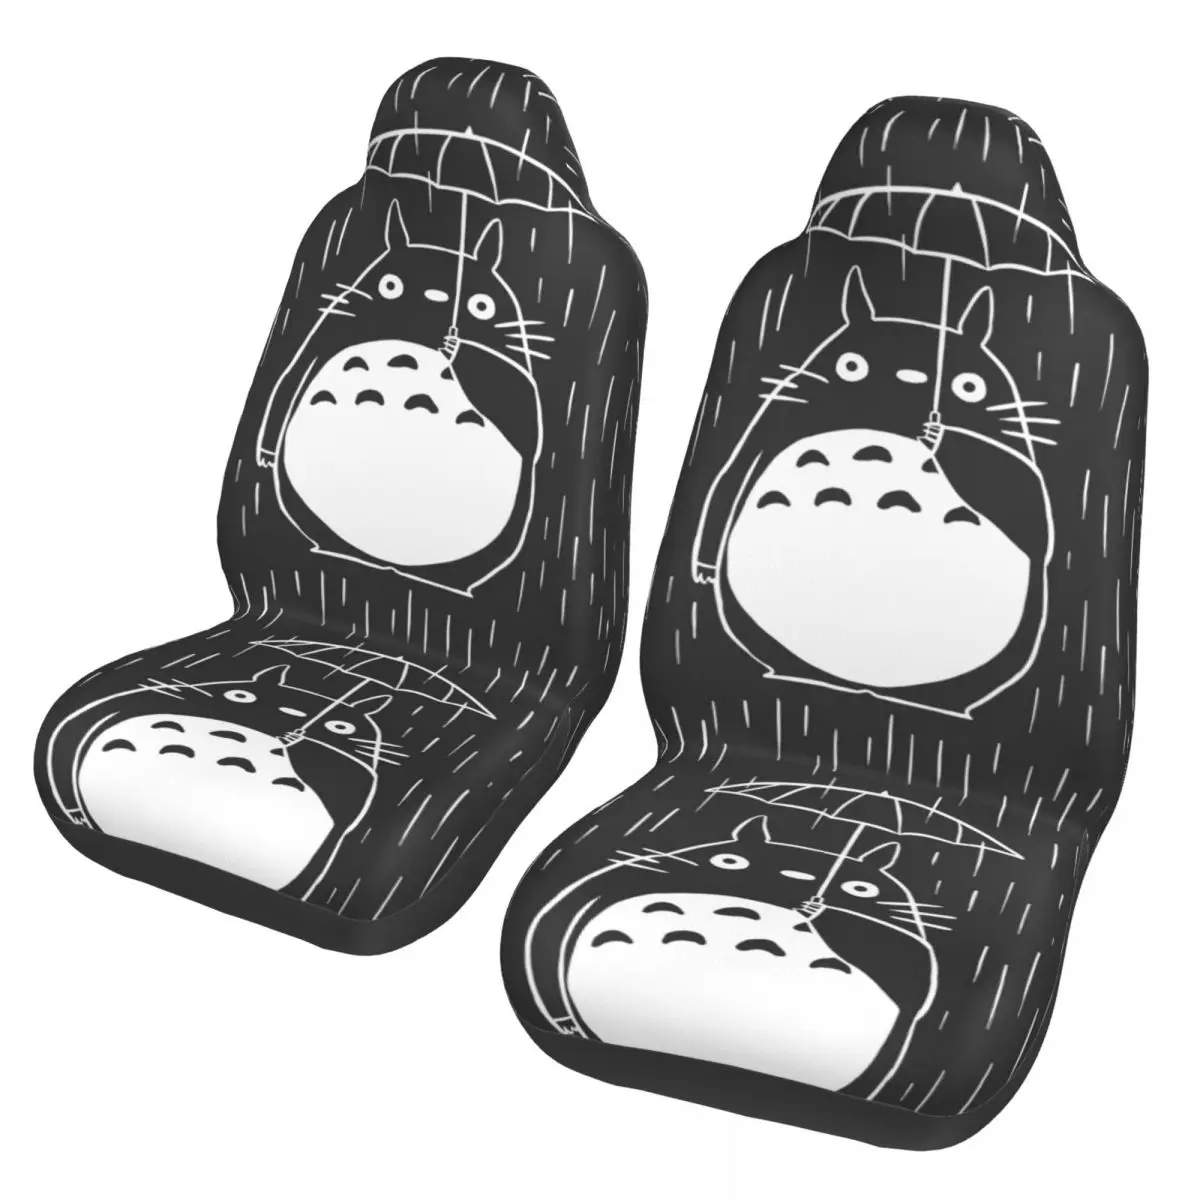 My Neighbor Totoro Studio Ghibli Anime Car Seat Covers Universal Fit for Cars Hayao Miyazaki Manga Bucket Seats Protector Covers